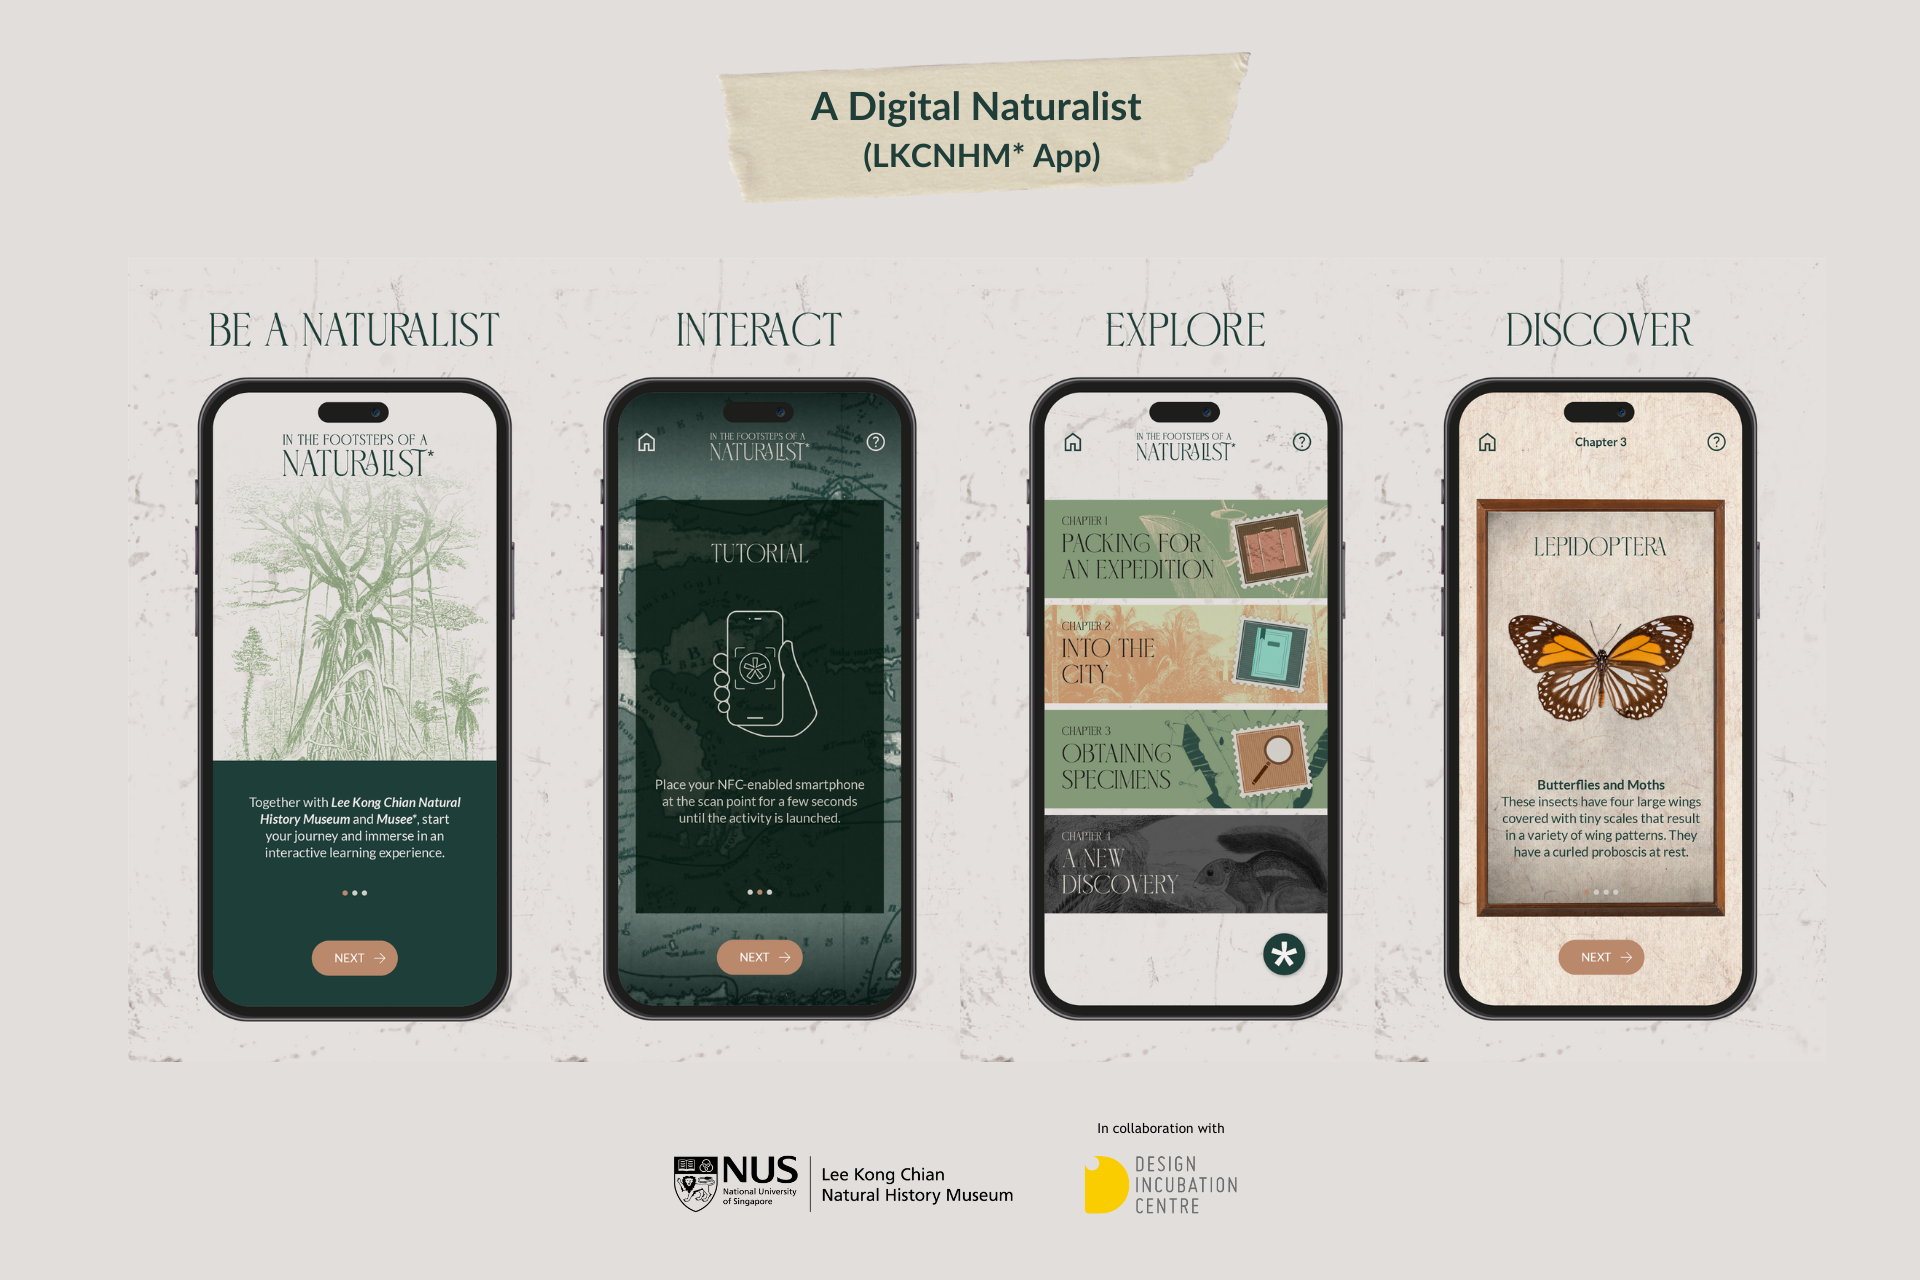 Screenshots of the 'A Digital Naturalist' (LKCNHM* App) on a grey background.